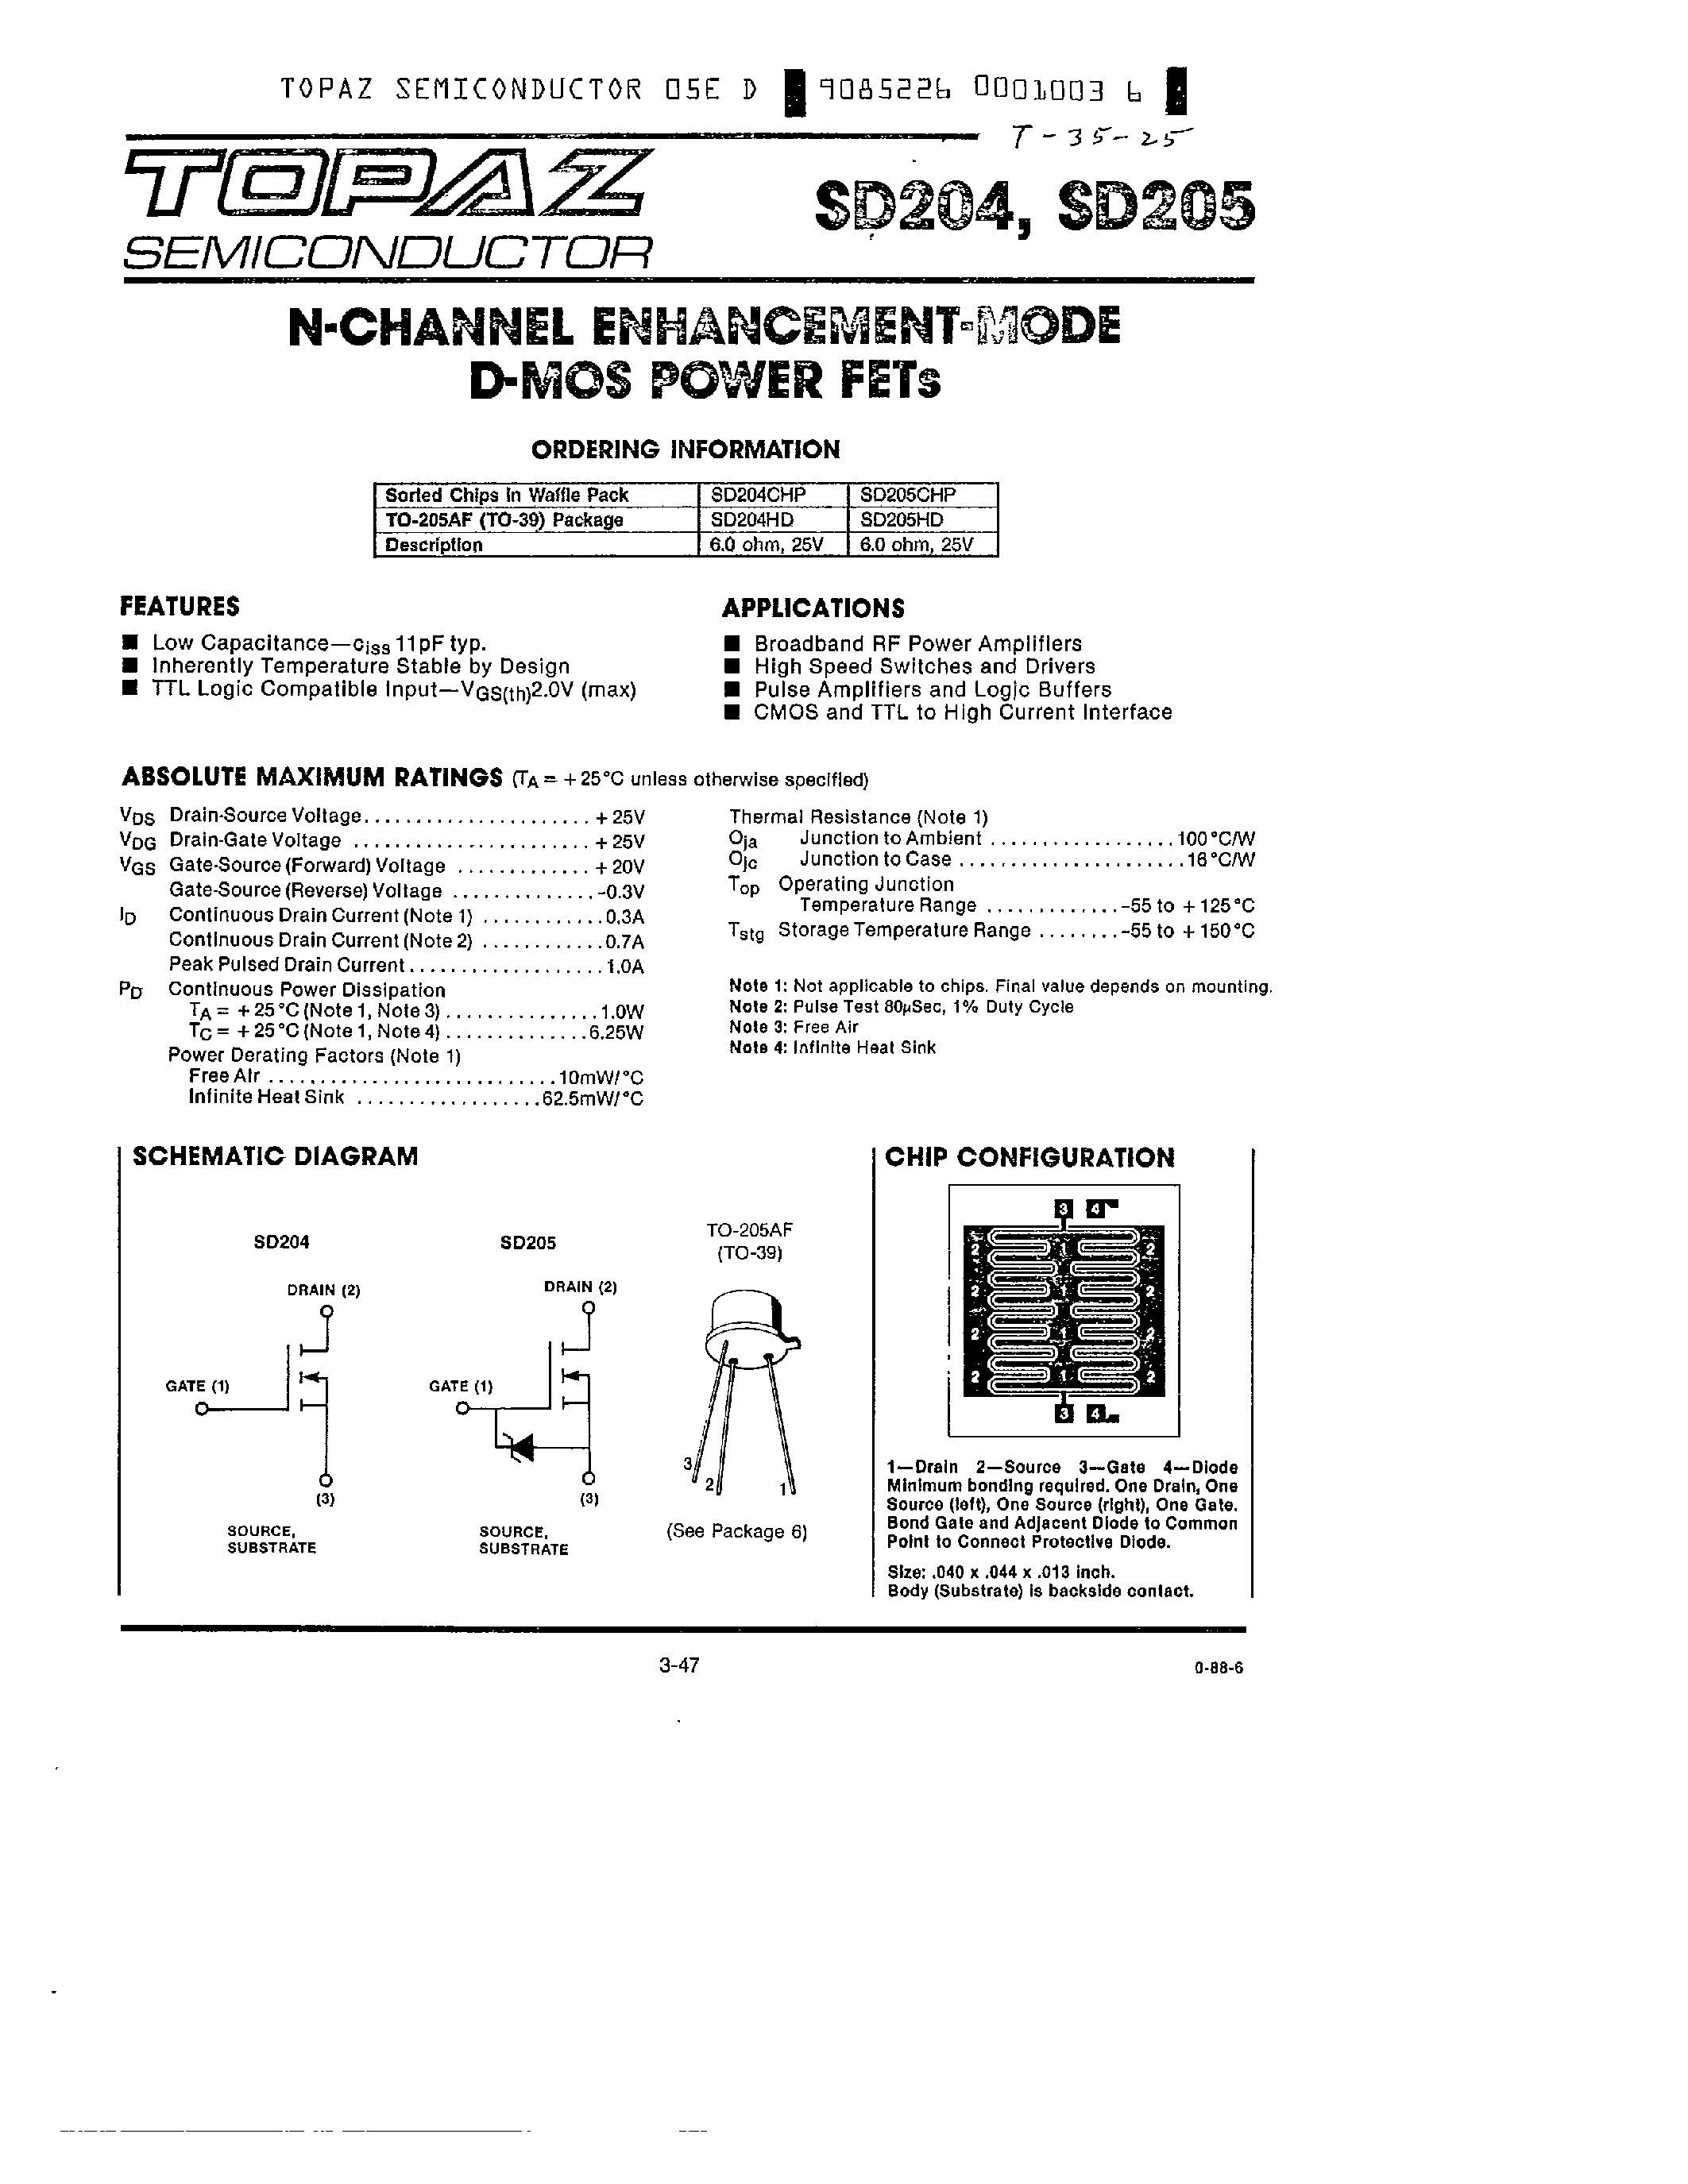 Datasheet SD204 - (SD204 / SD205) N-CHANNEL ENHANCEMEN-MODE D-MOS POWER FETs page 1